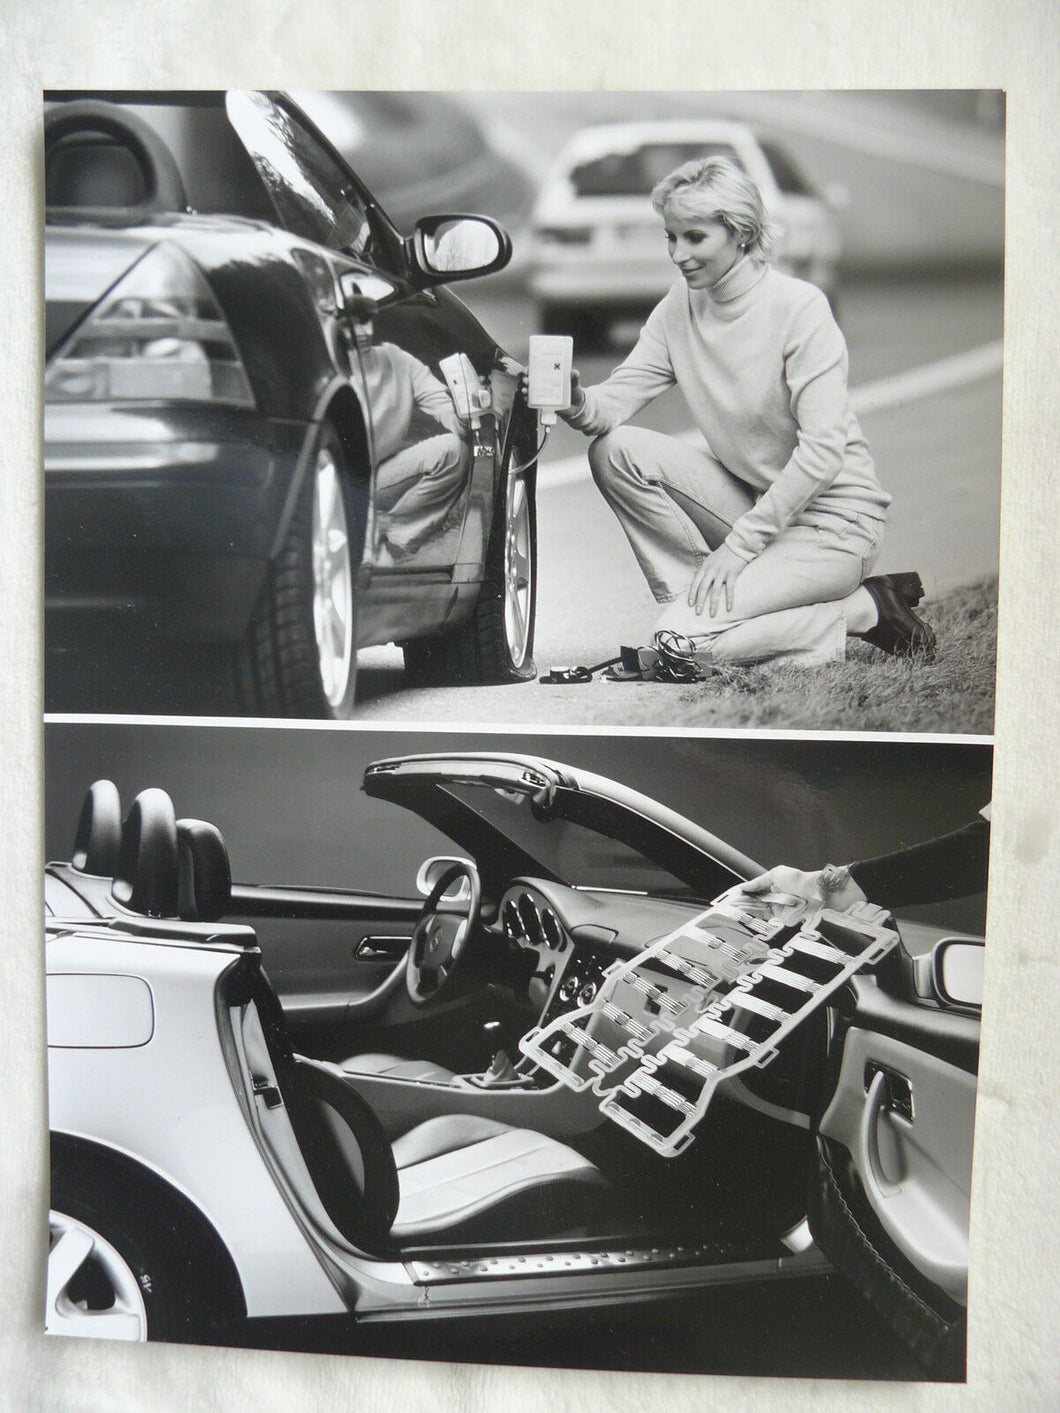 Mercedes SLK Tire-Fit Kindersitzerkennung - Pressefoto press photo 1996